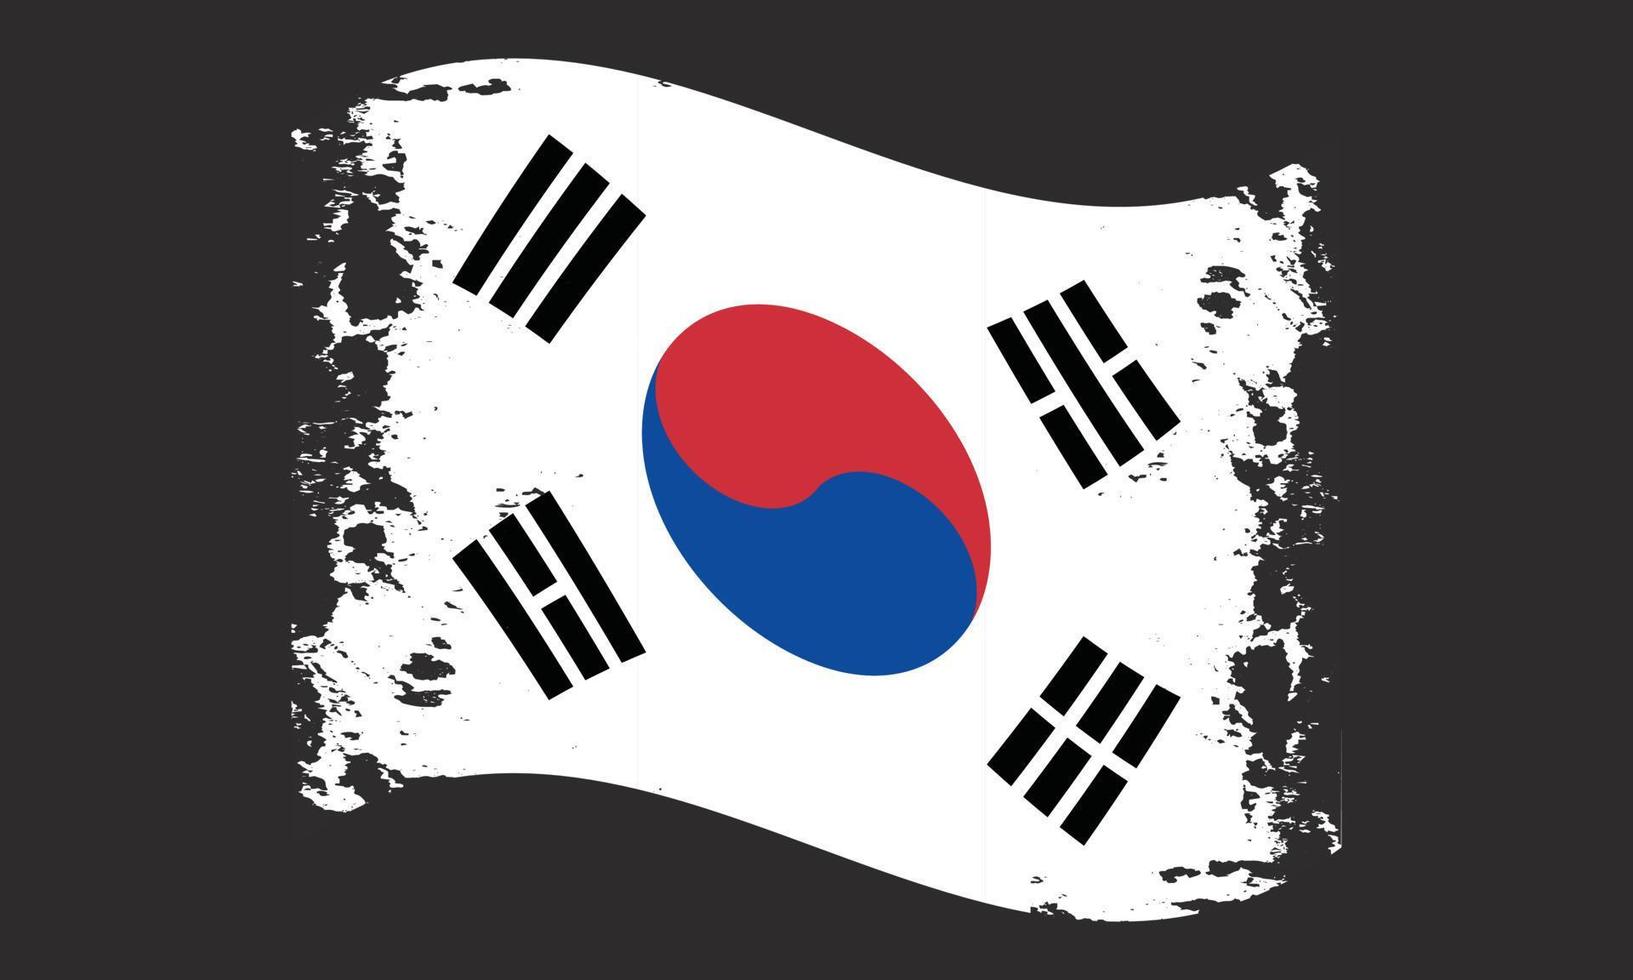 South Korea wavy grunge Brush Flag Design vector